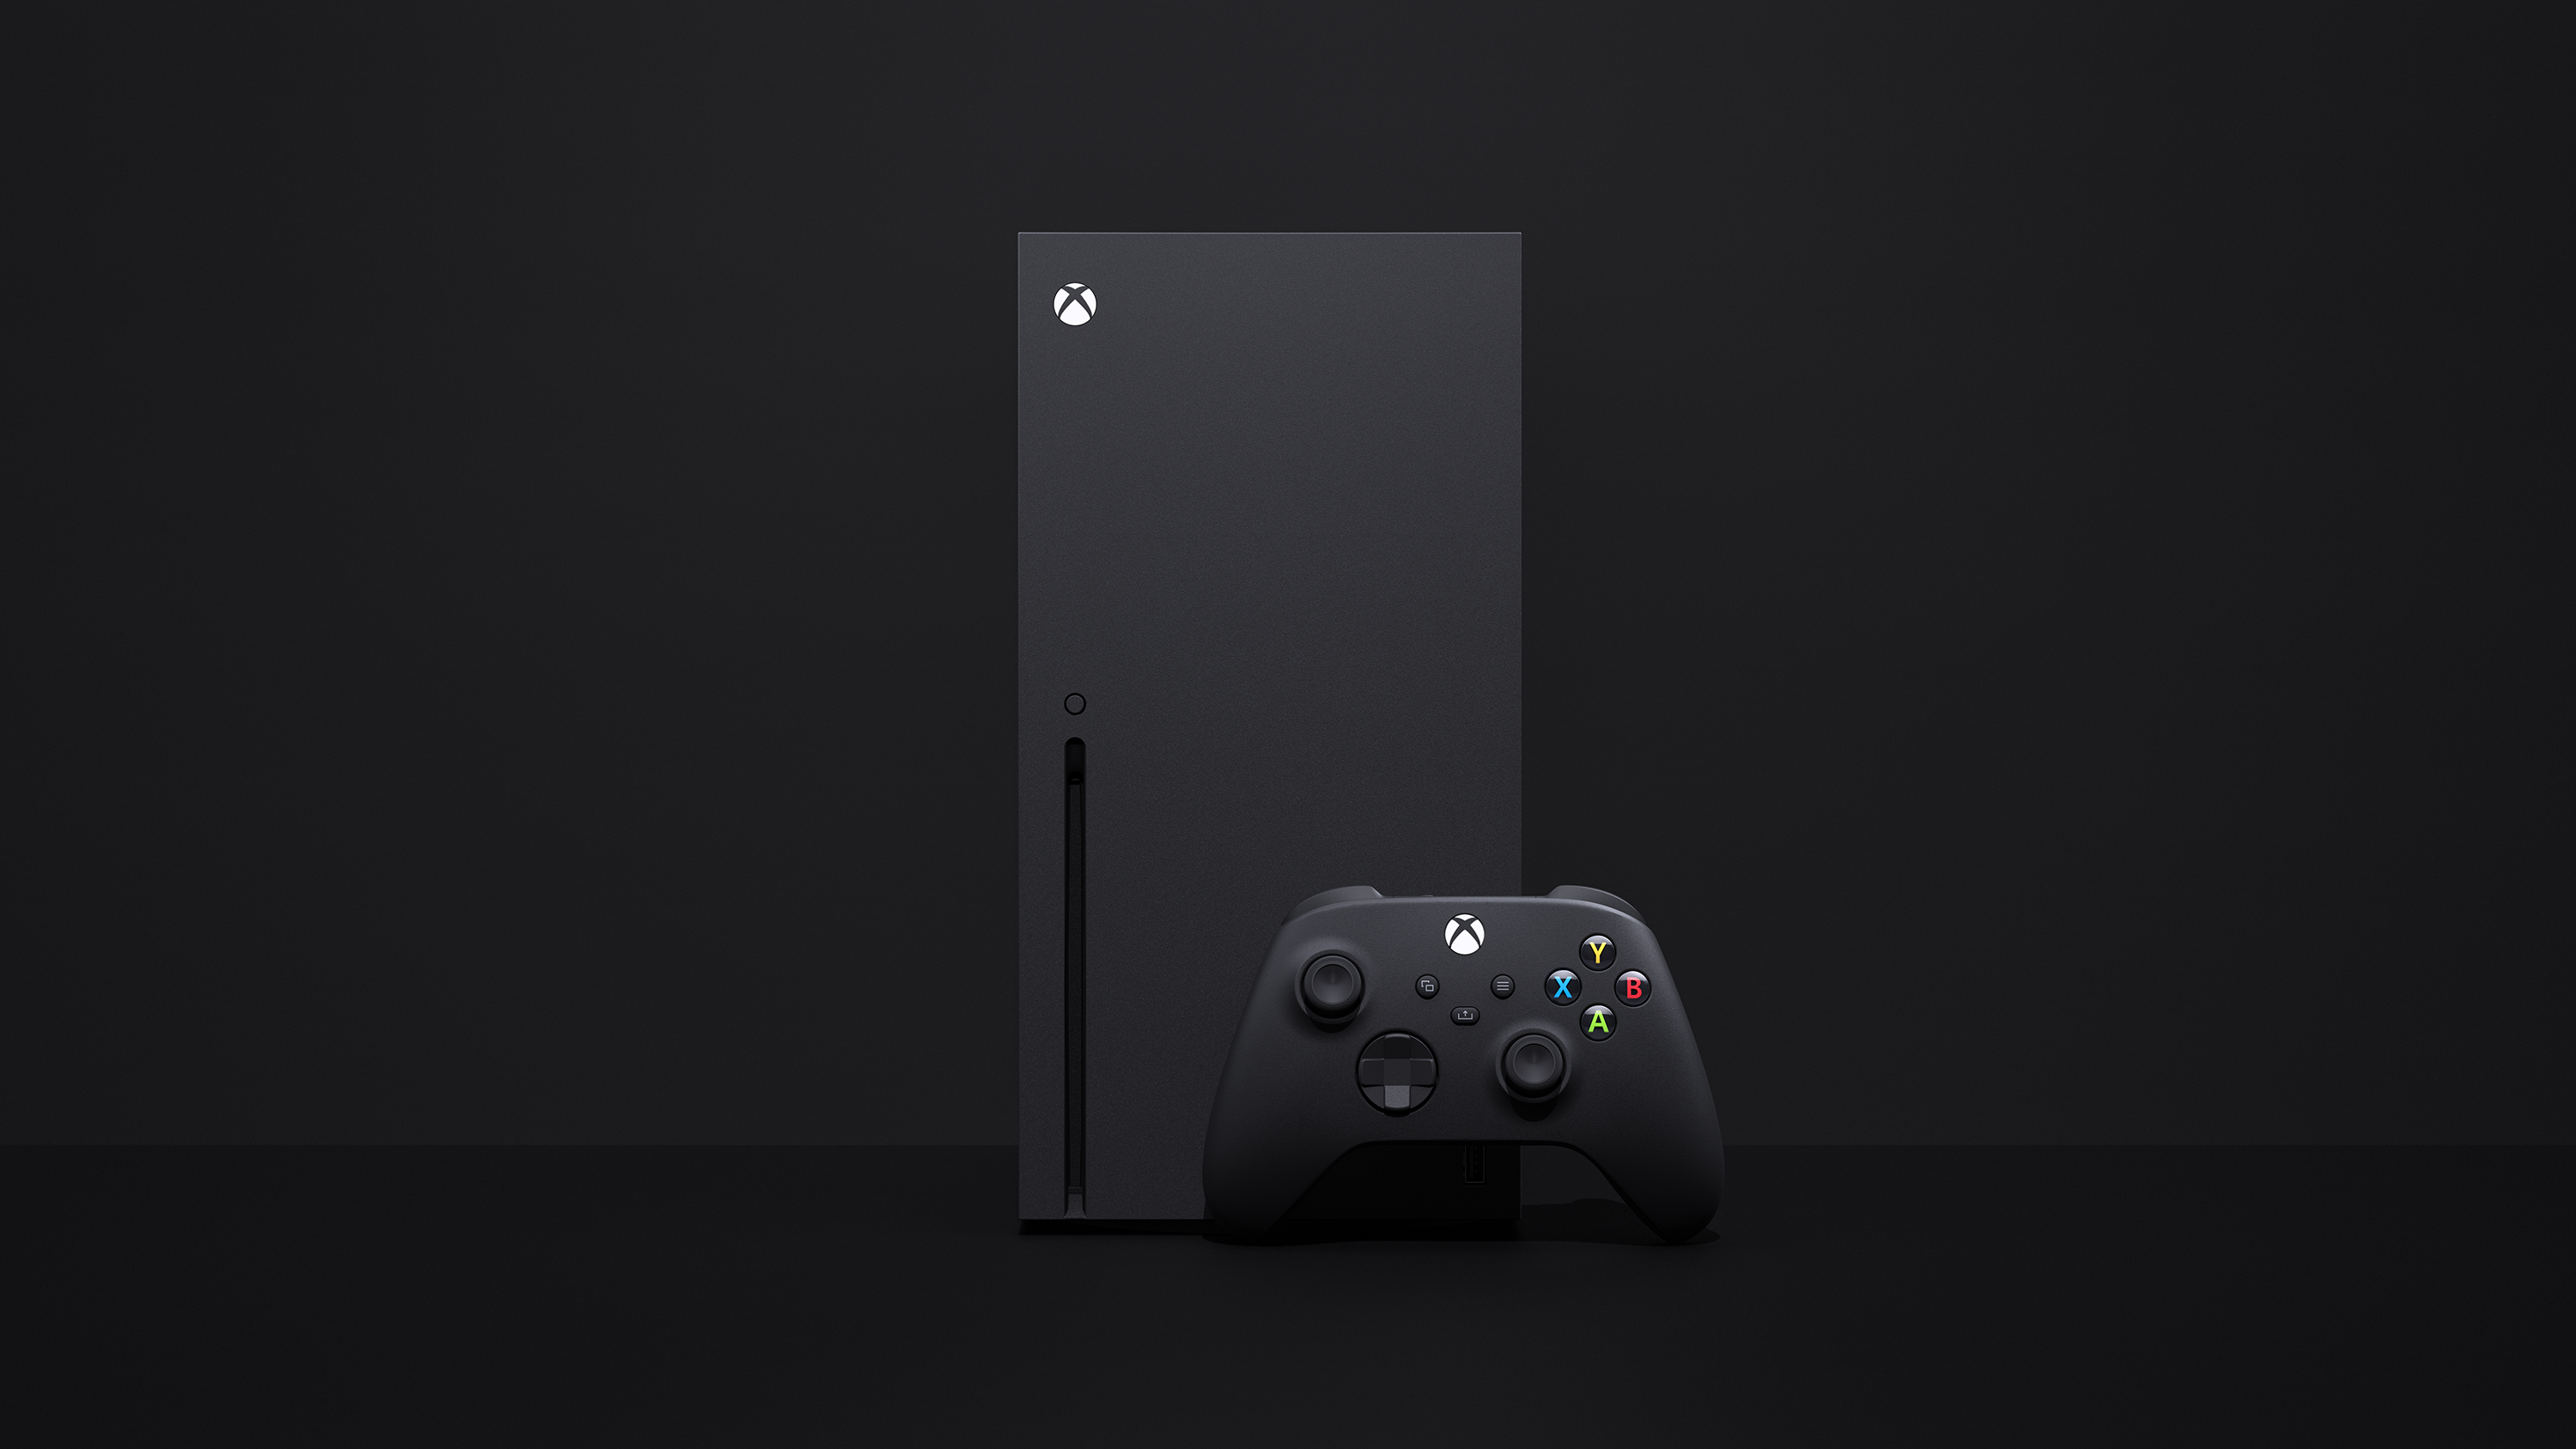 produktbild av Xbox Series X stående med handkontrollen stående framför sig, på en svart bakgrund